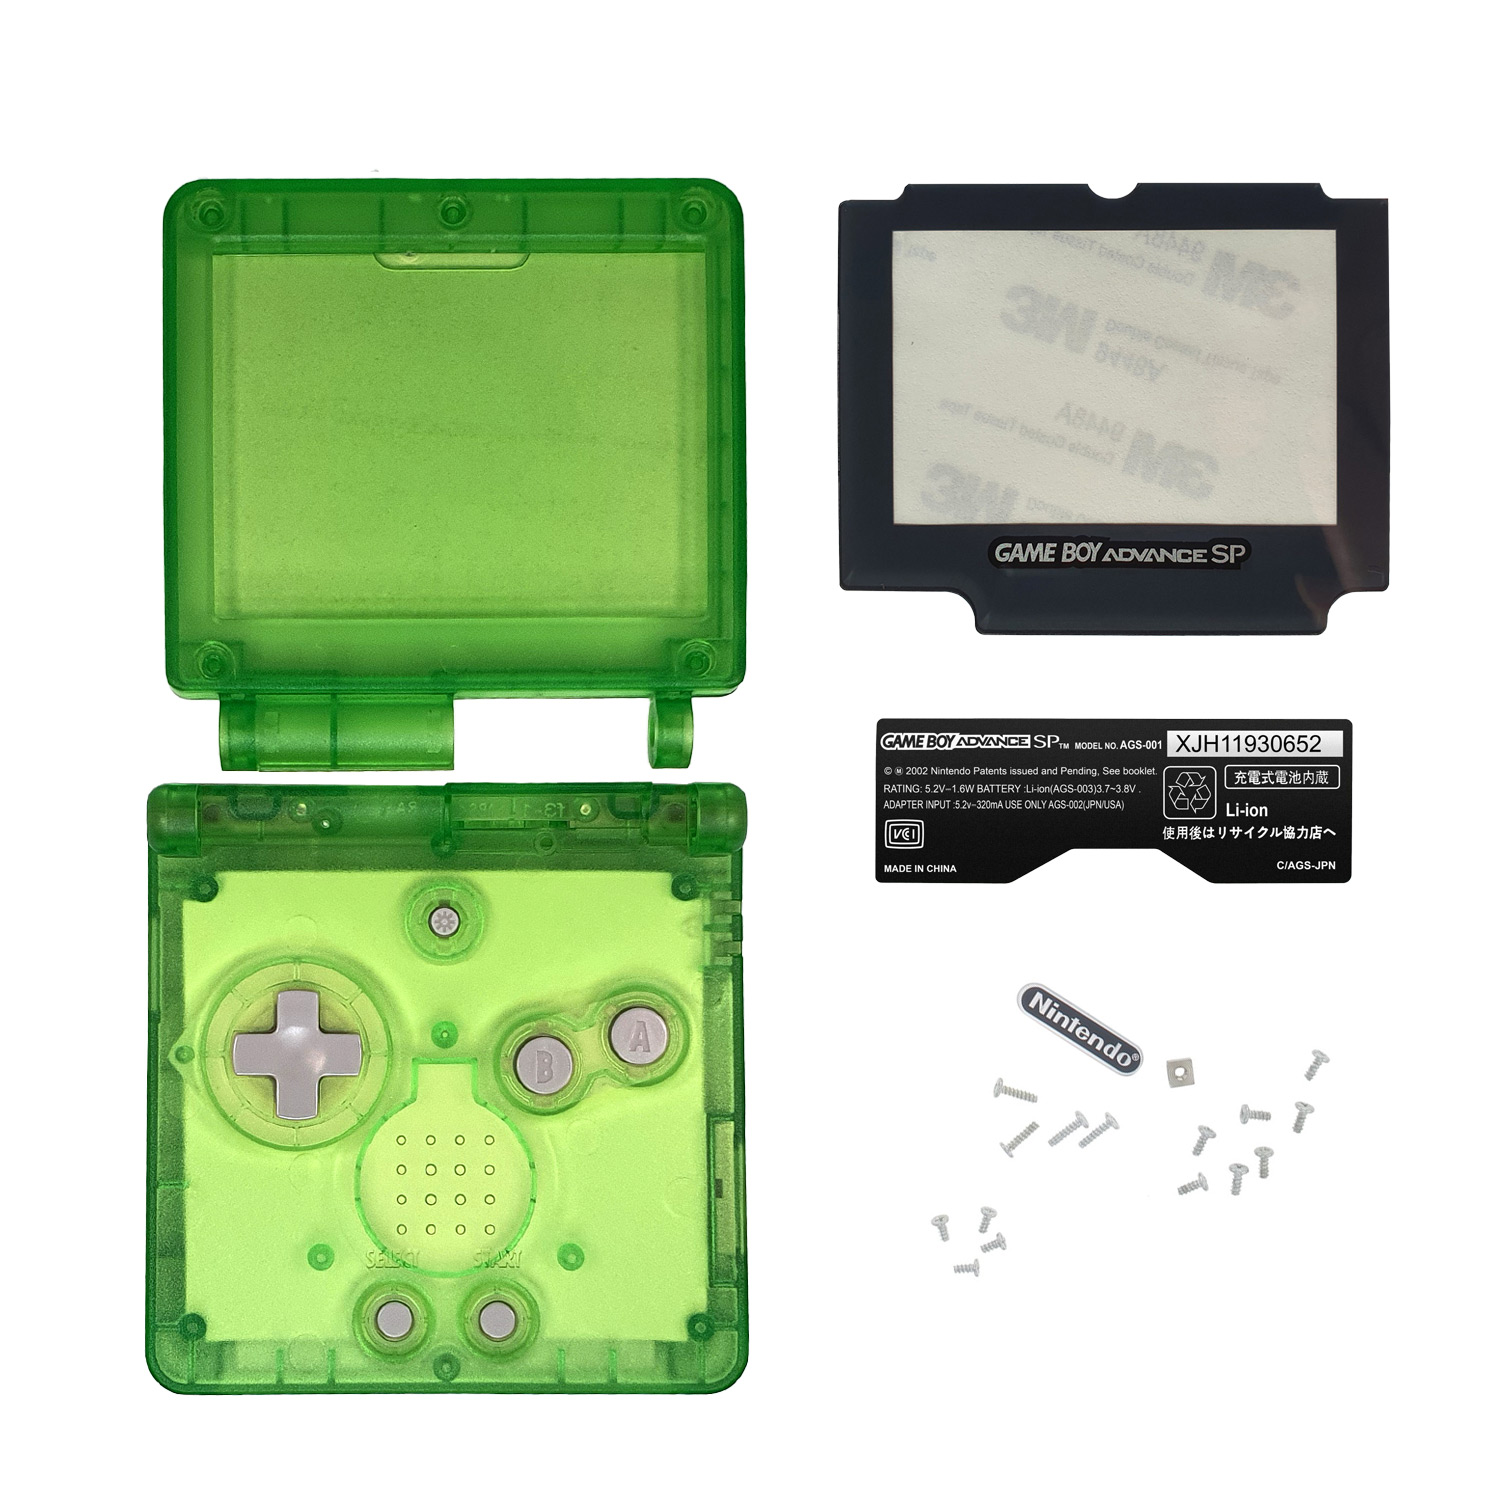 Game Boy Advance SP Gehäuse (Clear Green)